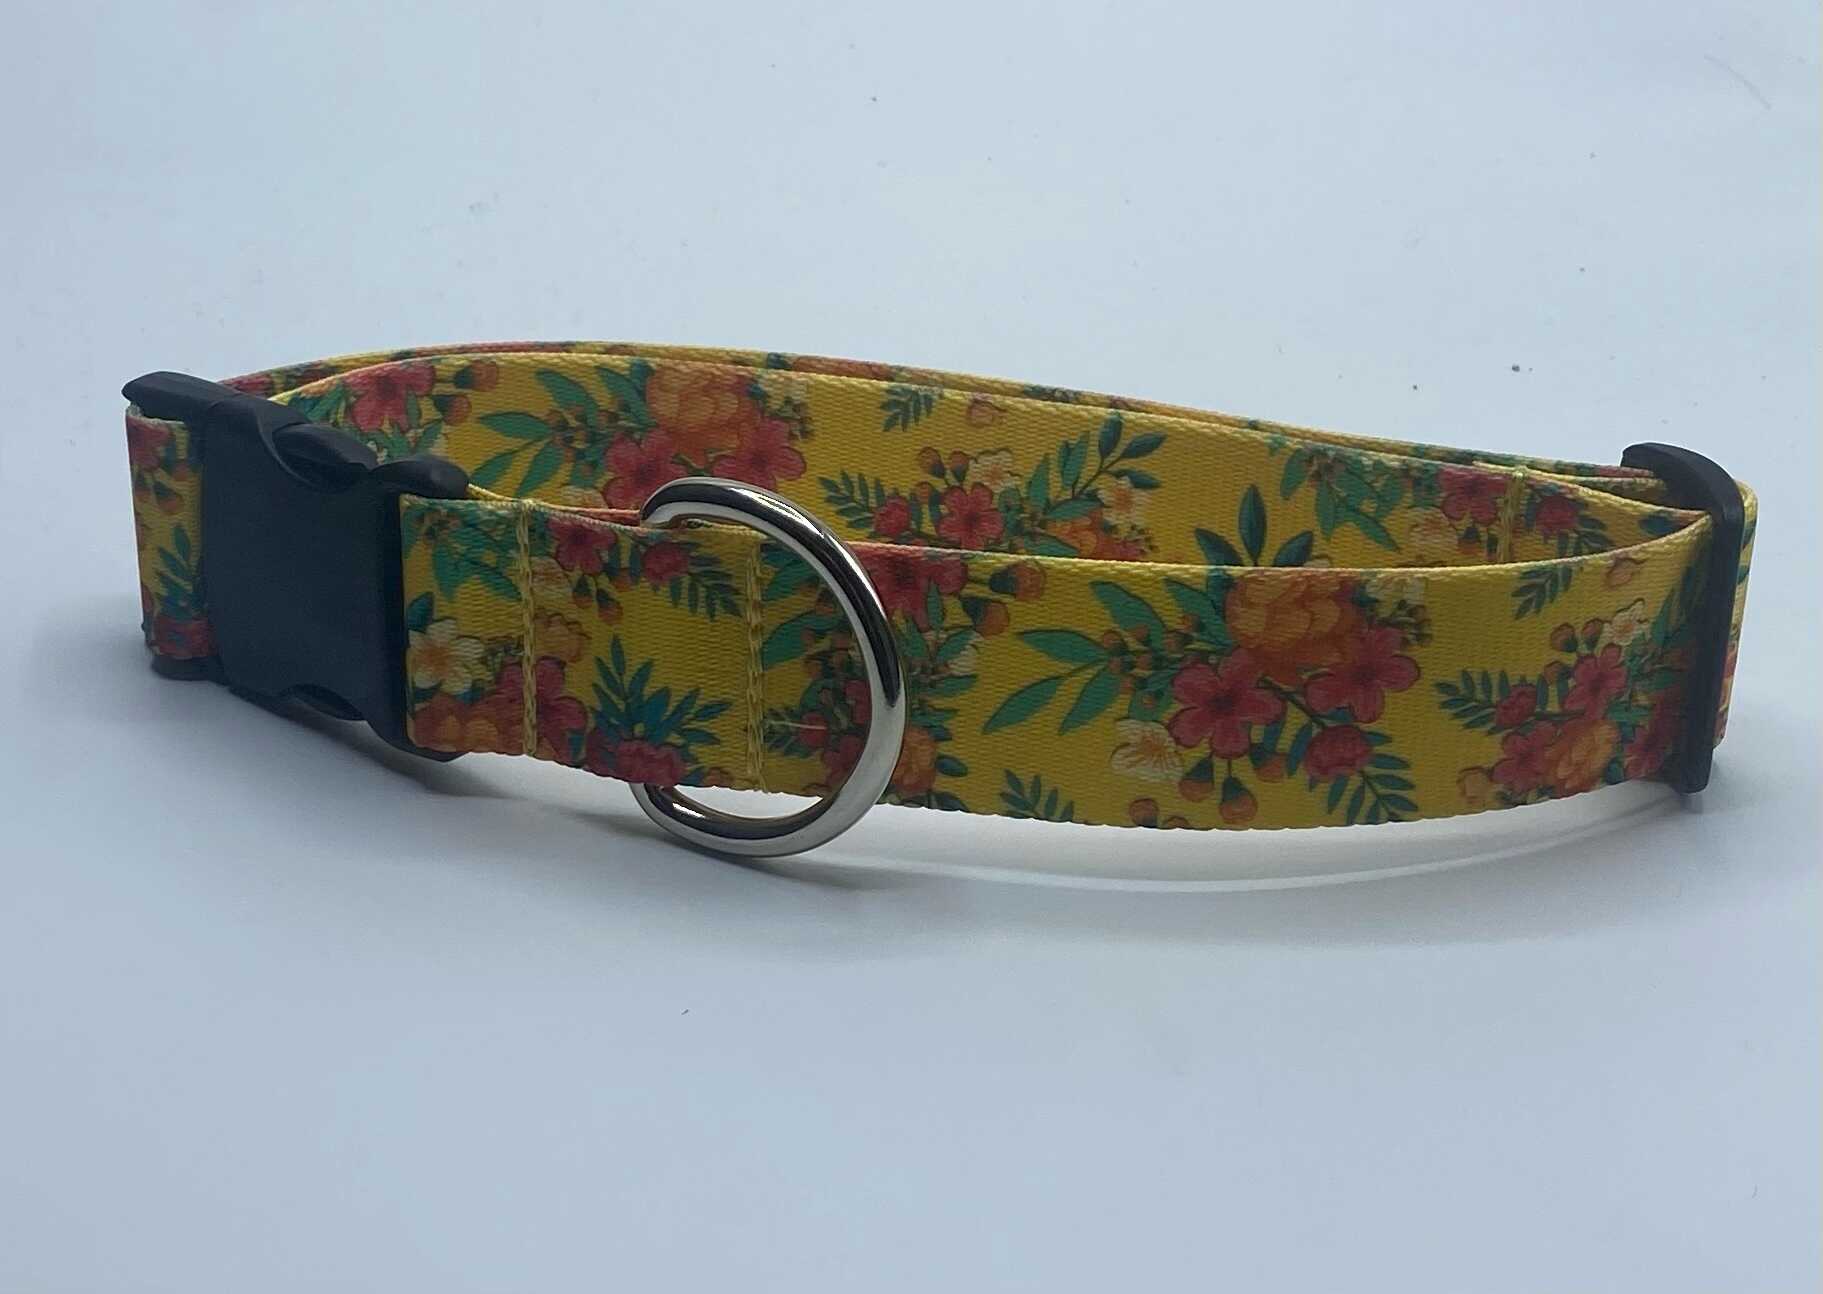 Hibiscus Bouquet Dog Collar (1.5" Wide).